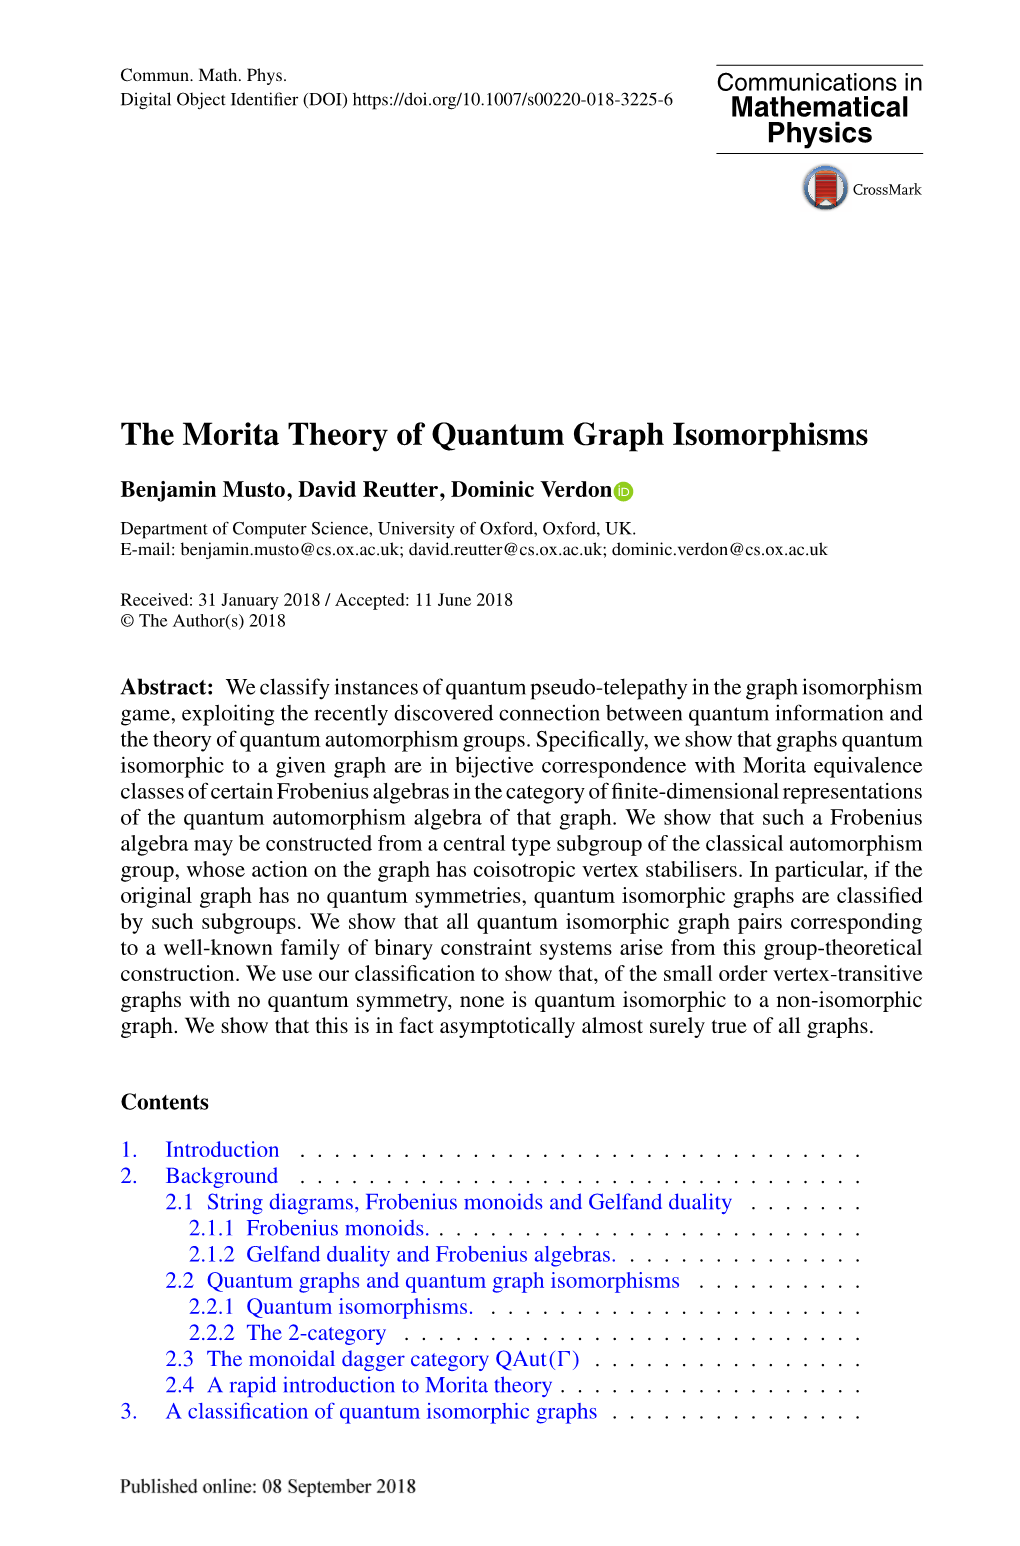 The Morita Theory of Quantum Graph Isomorphisms